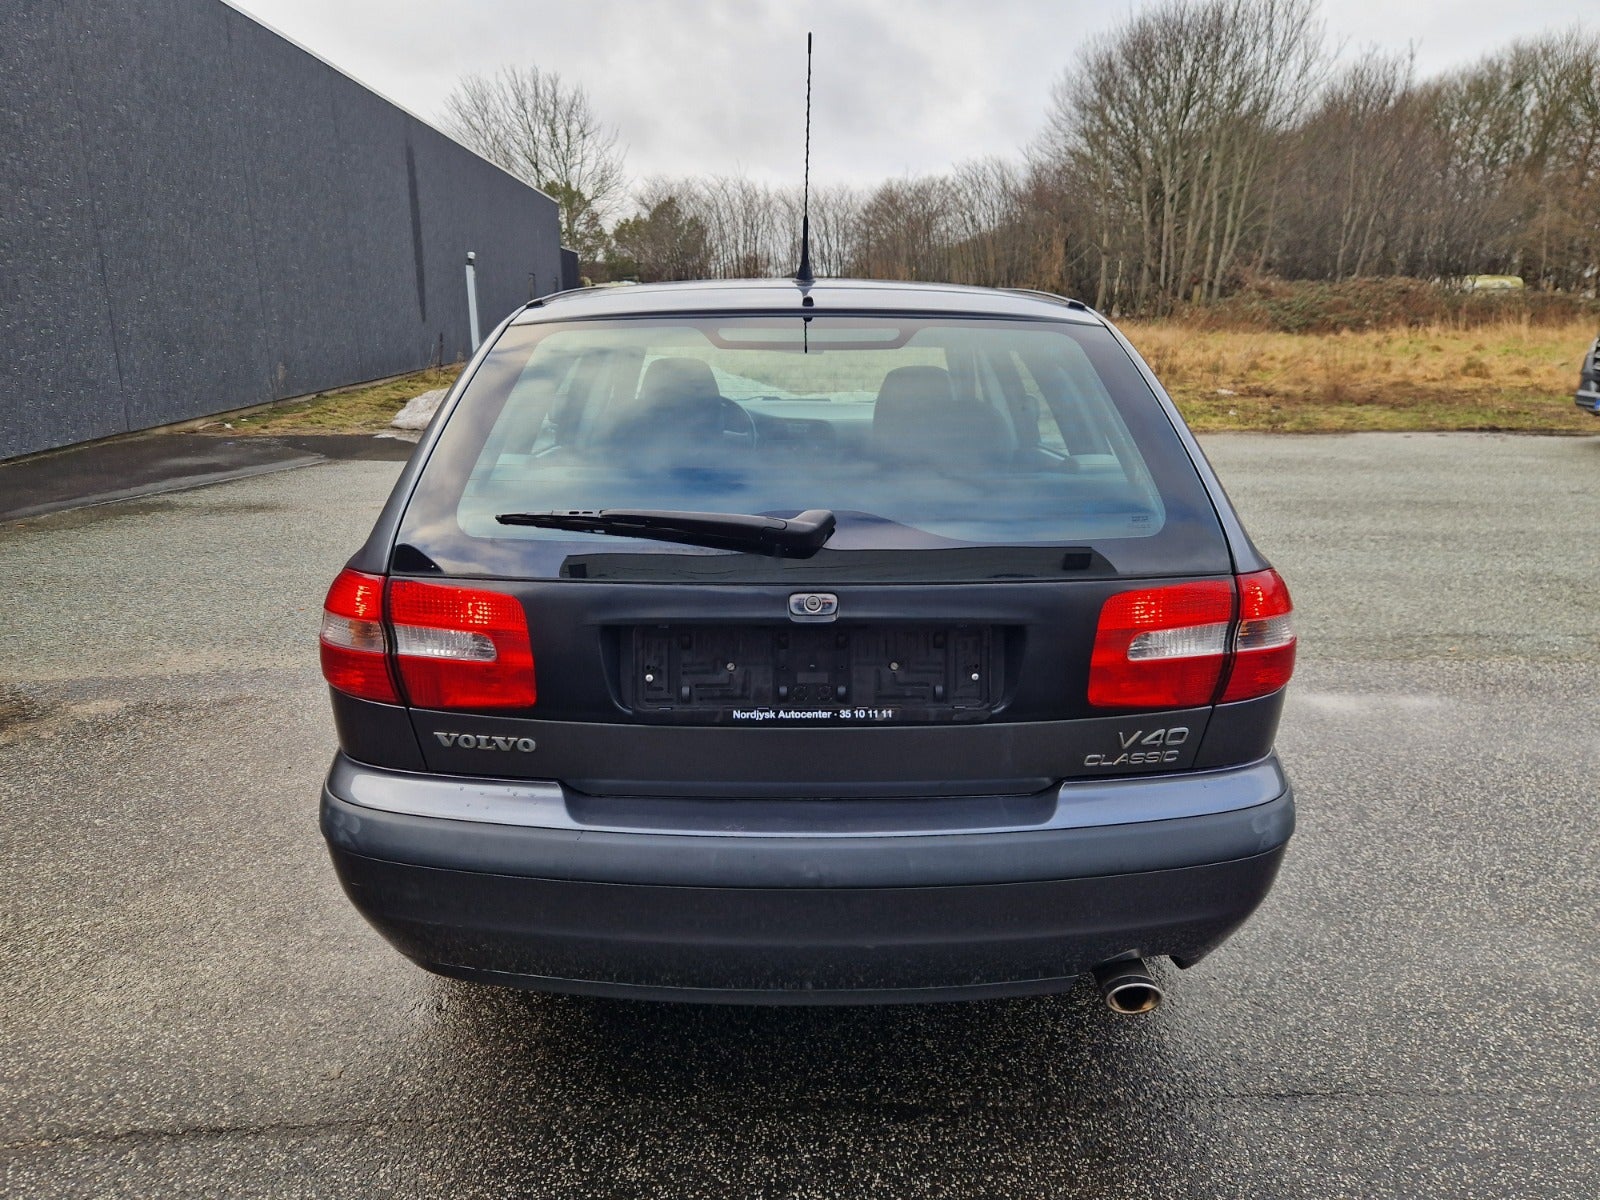 Volvo V40 1,8 Addition Benzin modelår 2003 km 128000 ABS